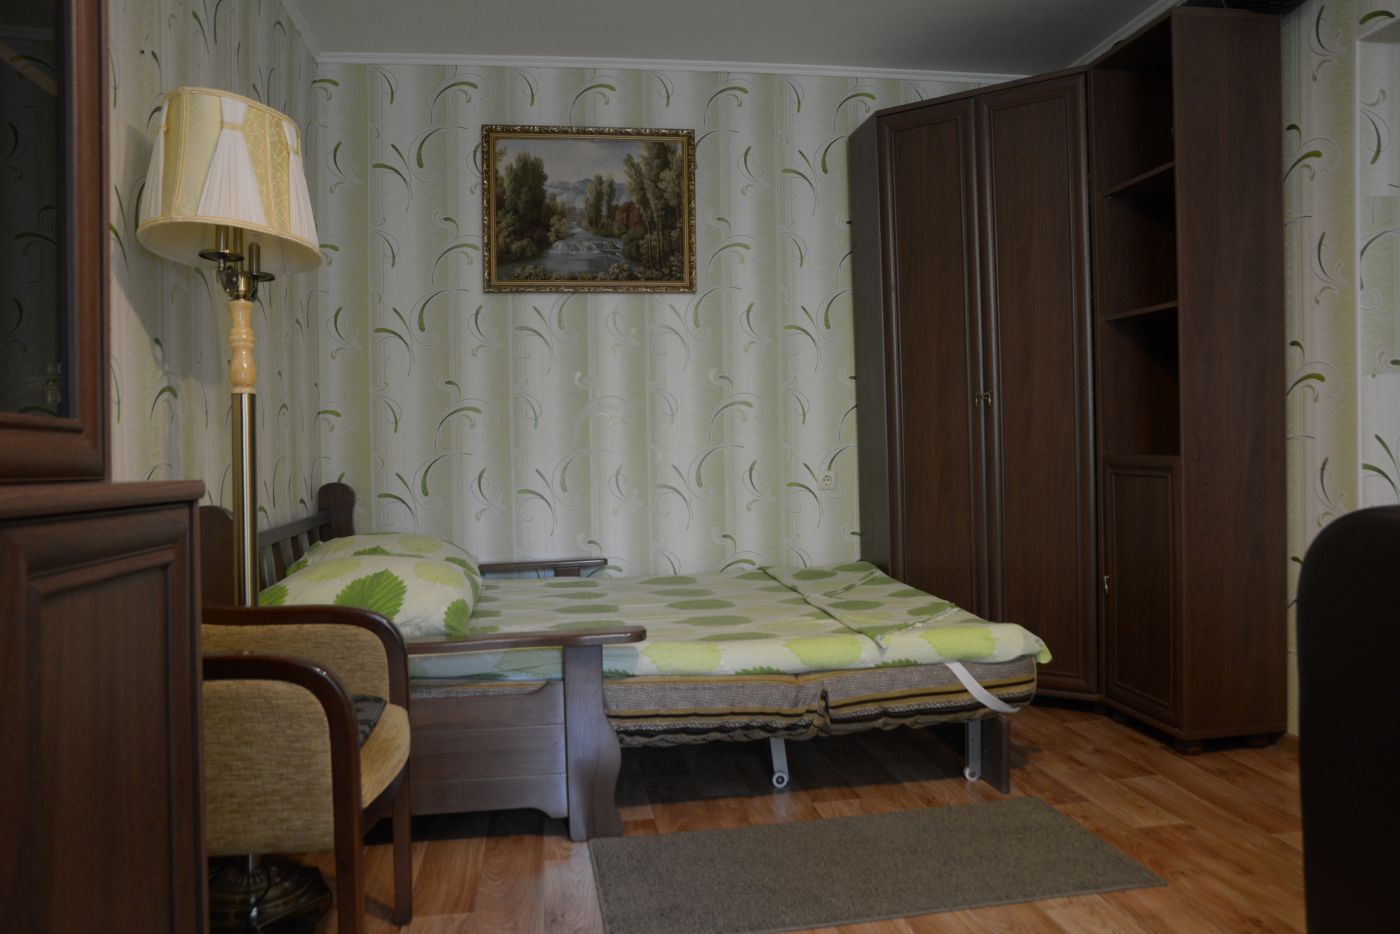 Квартира в многоквартирном доме  комфортная 1-но комн в центре п Лазаревского